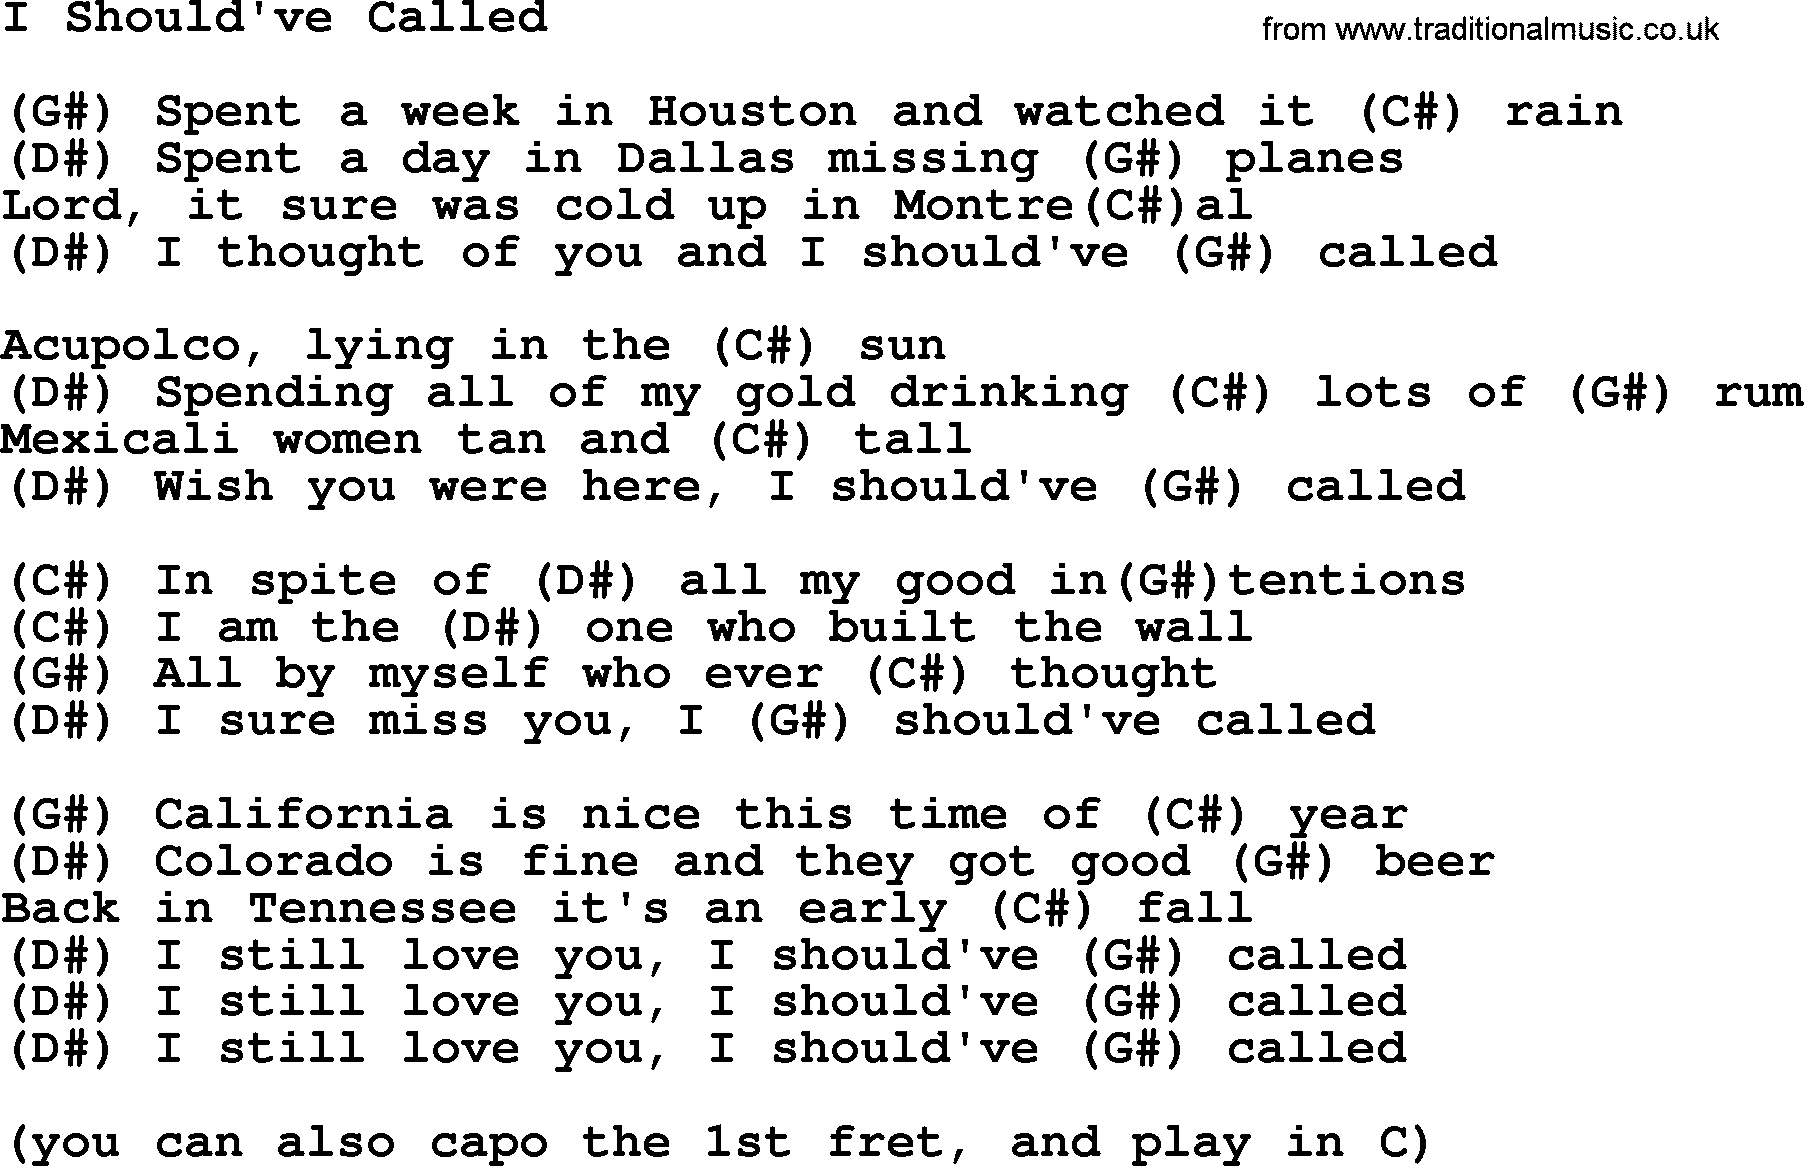 George Jones song: I Should've Called, lyrics and chords